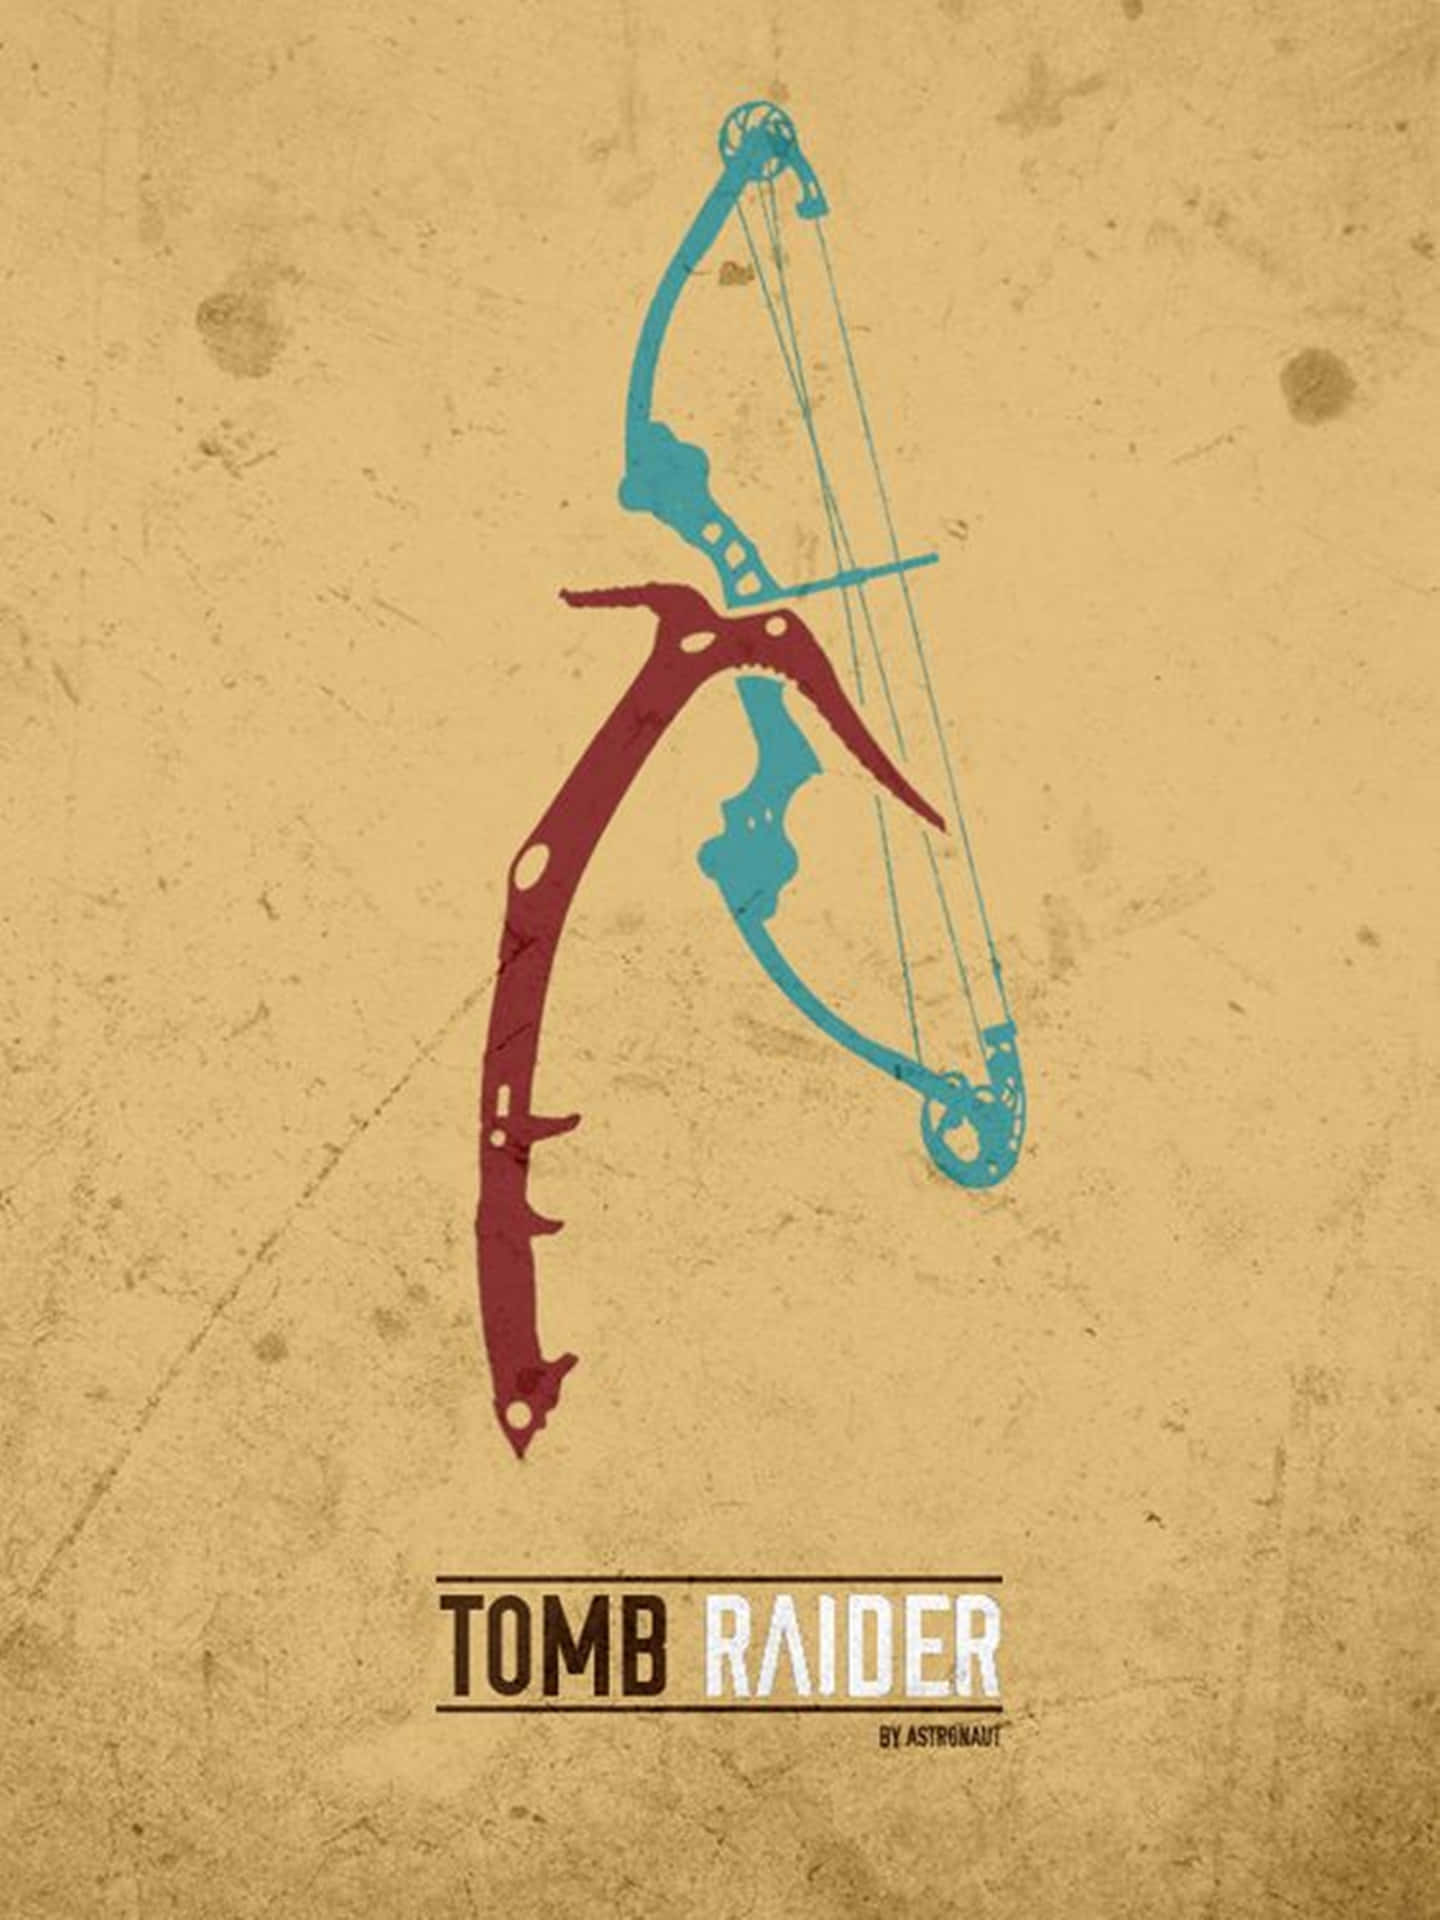 Spil Tomb Raider på din telefon. Wallpaper